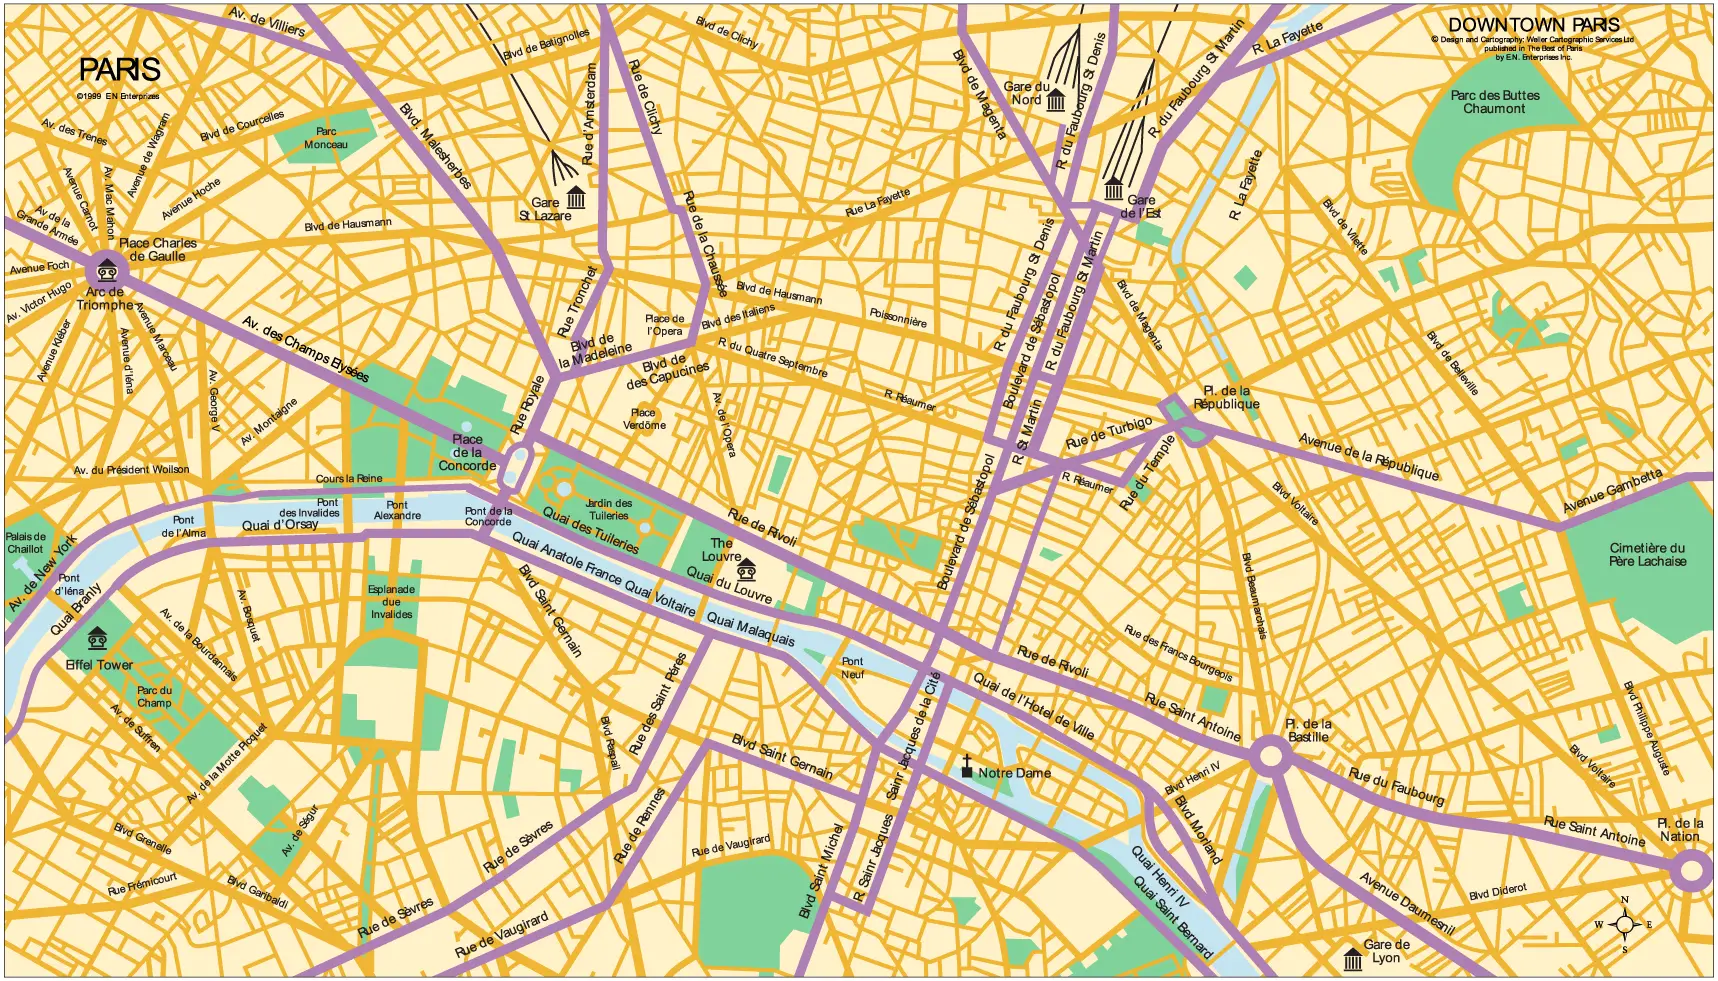 Downtown Map of Paris